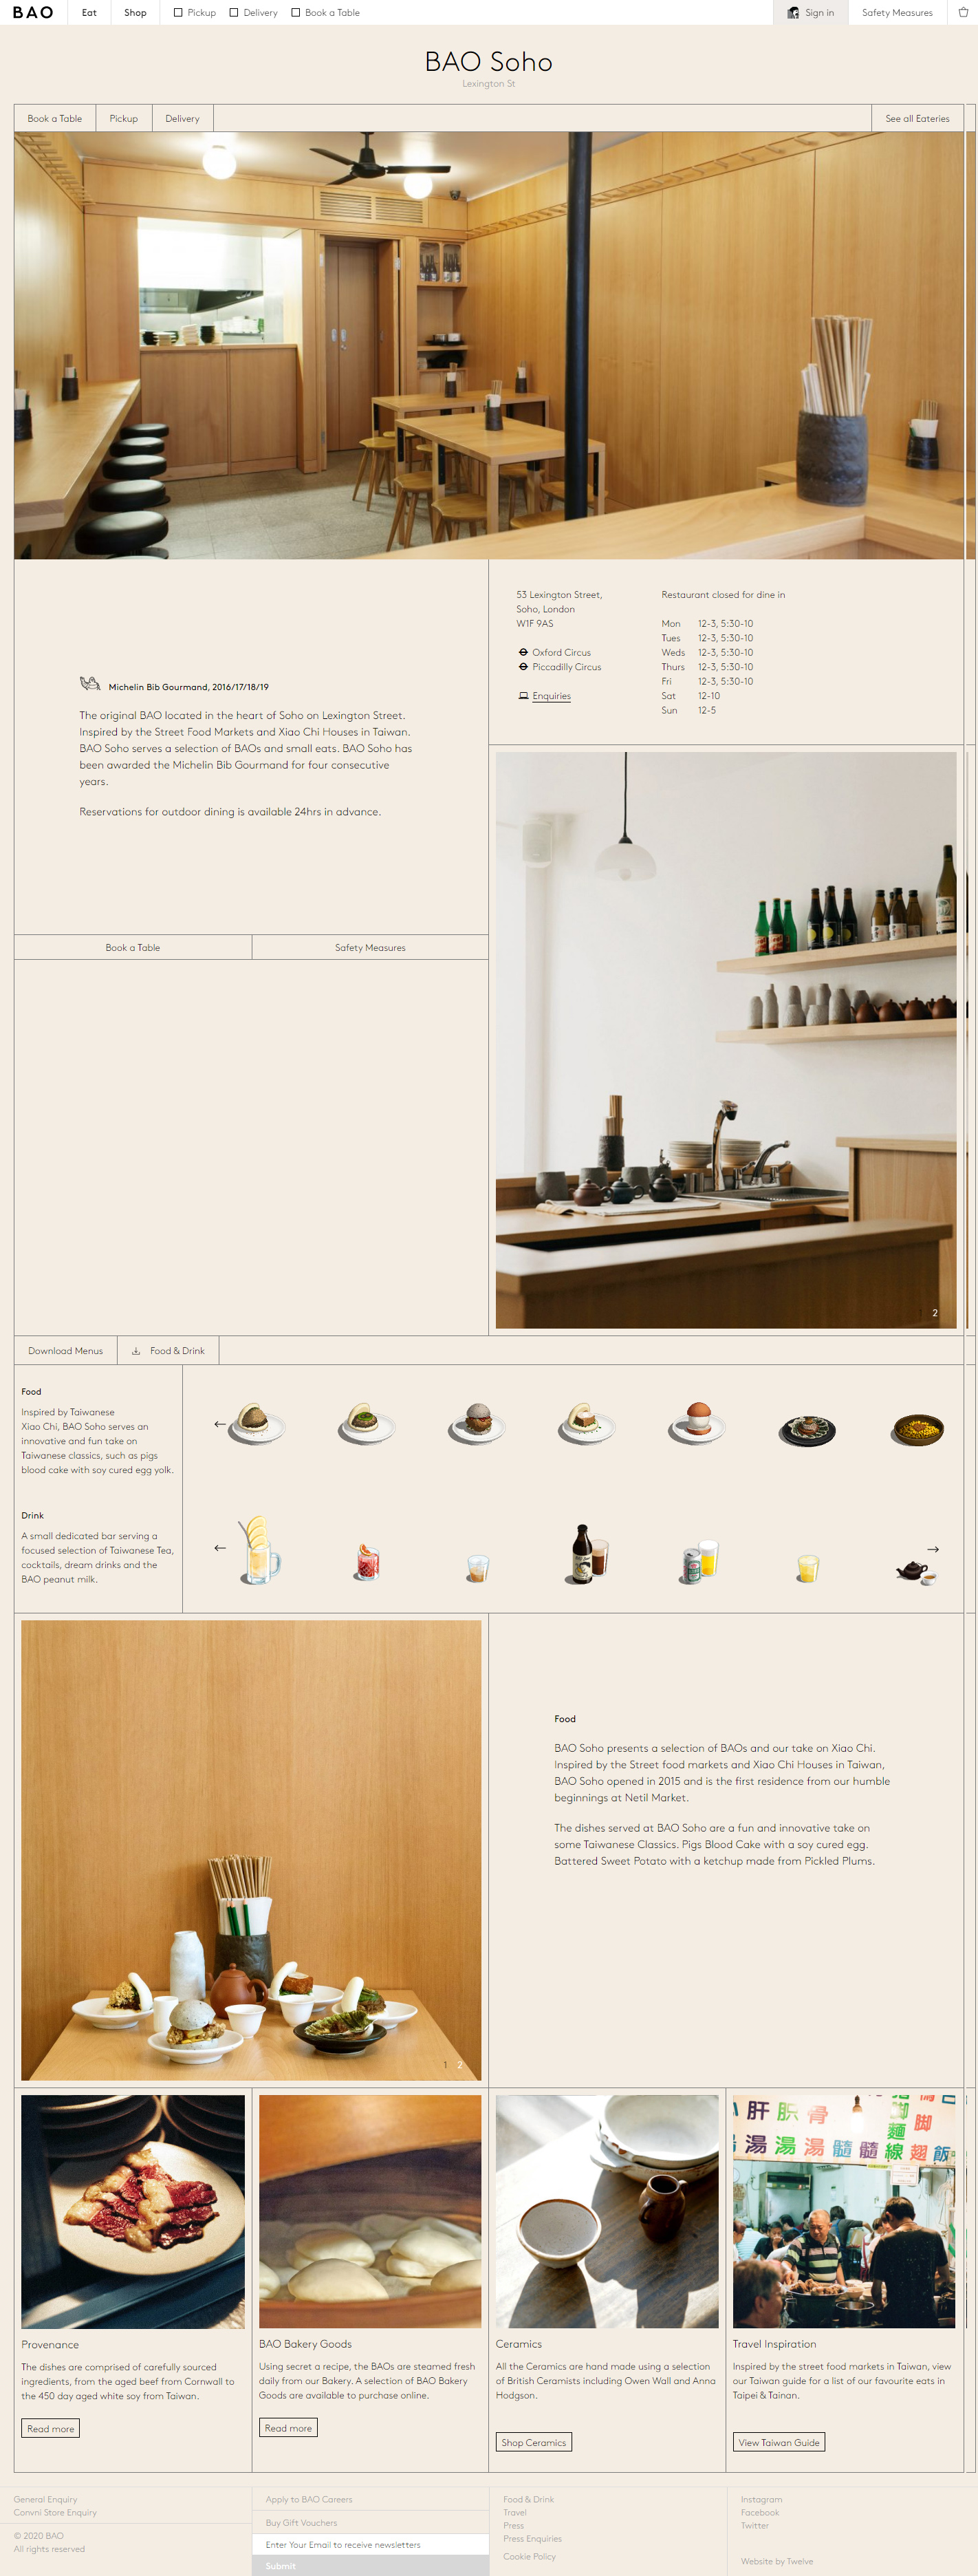 BAO London刈包餐厅网站设计